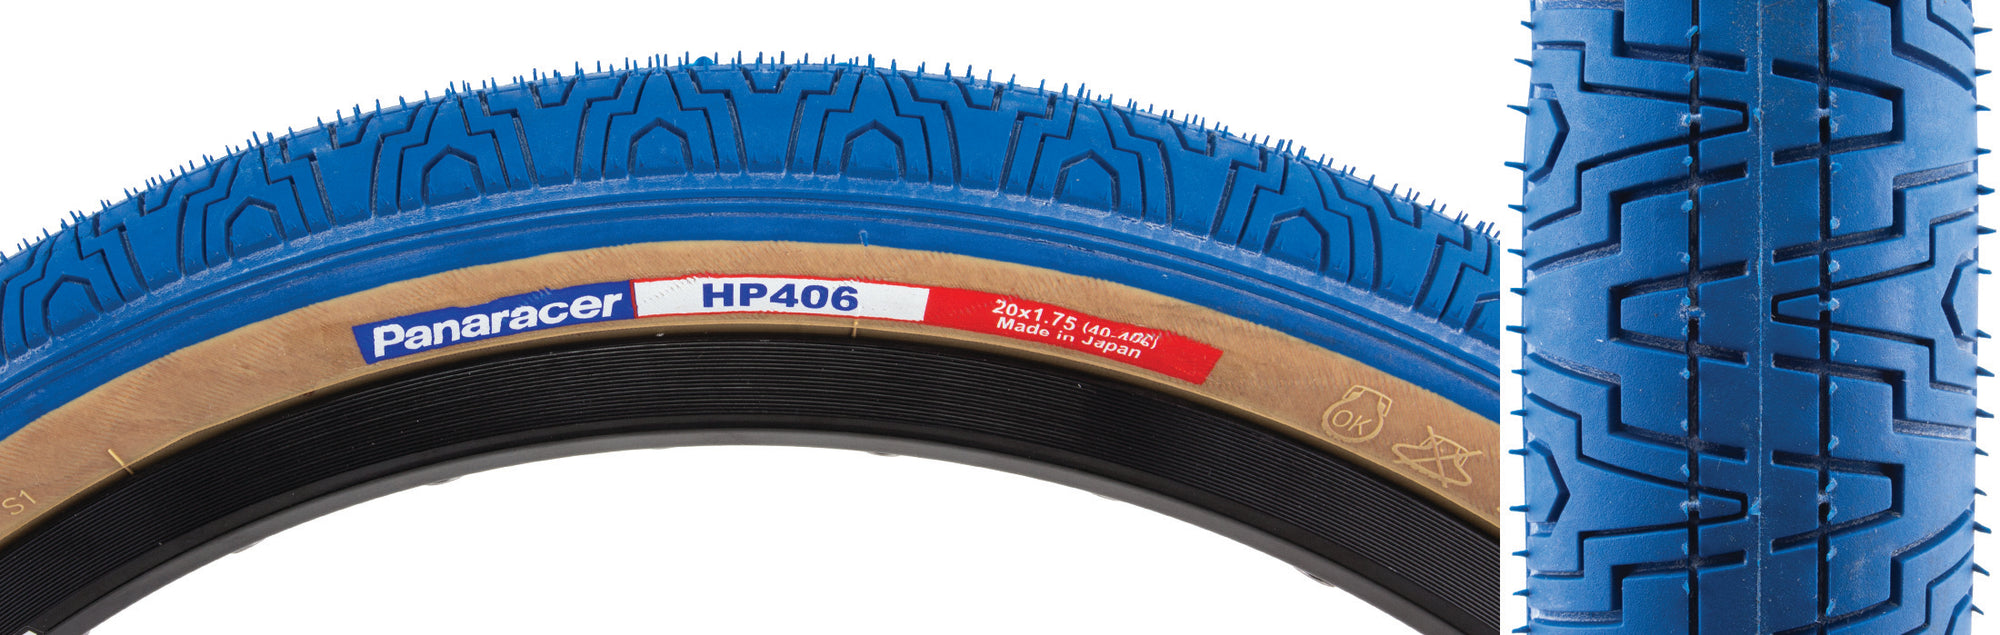 20x1.75 Panaracer HP406 Freestyle BMX tire - Blue w/ Skinwall